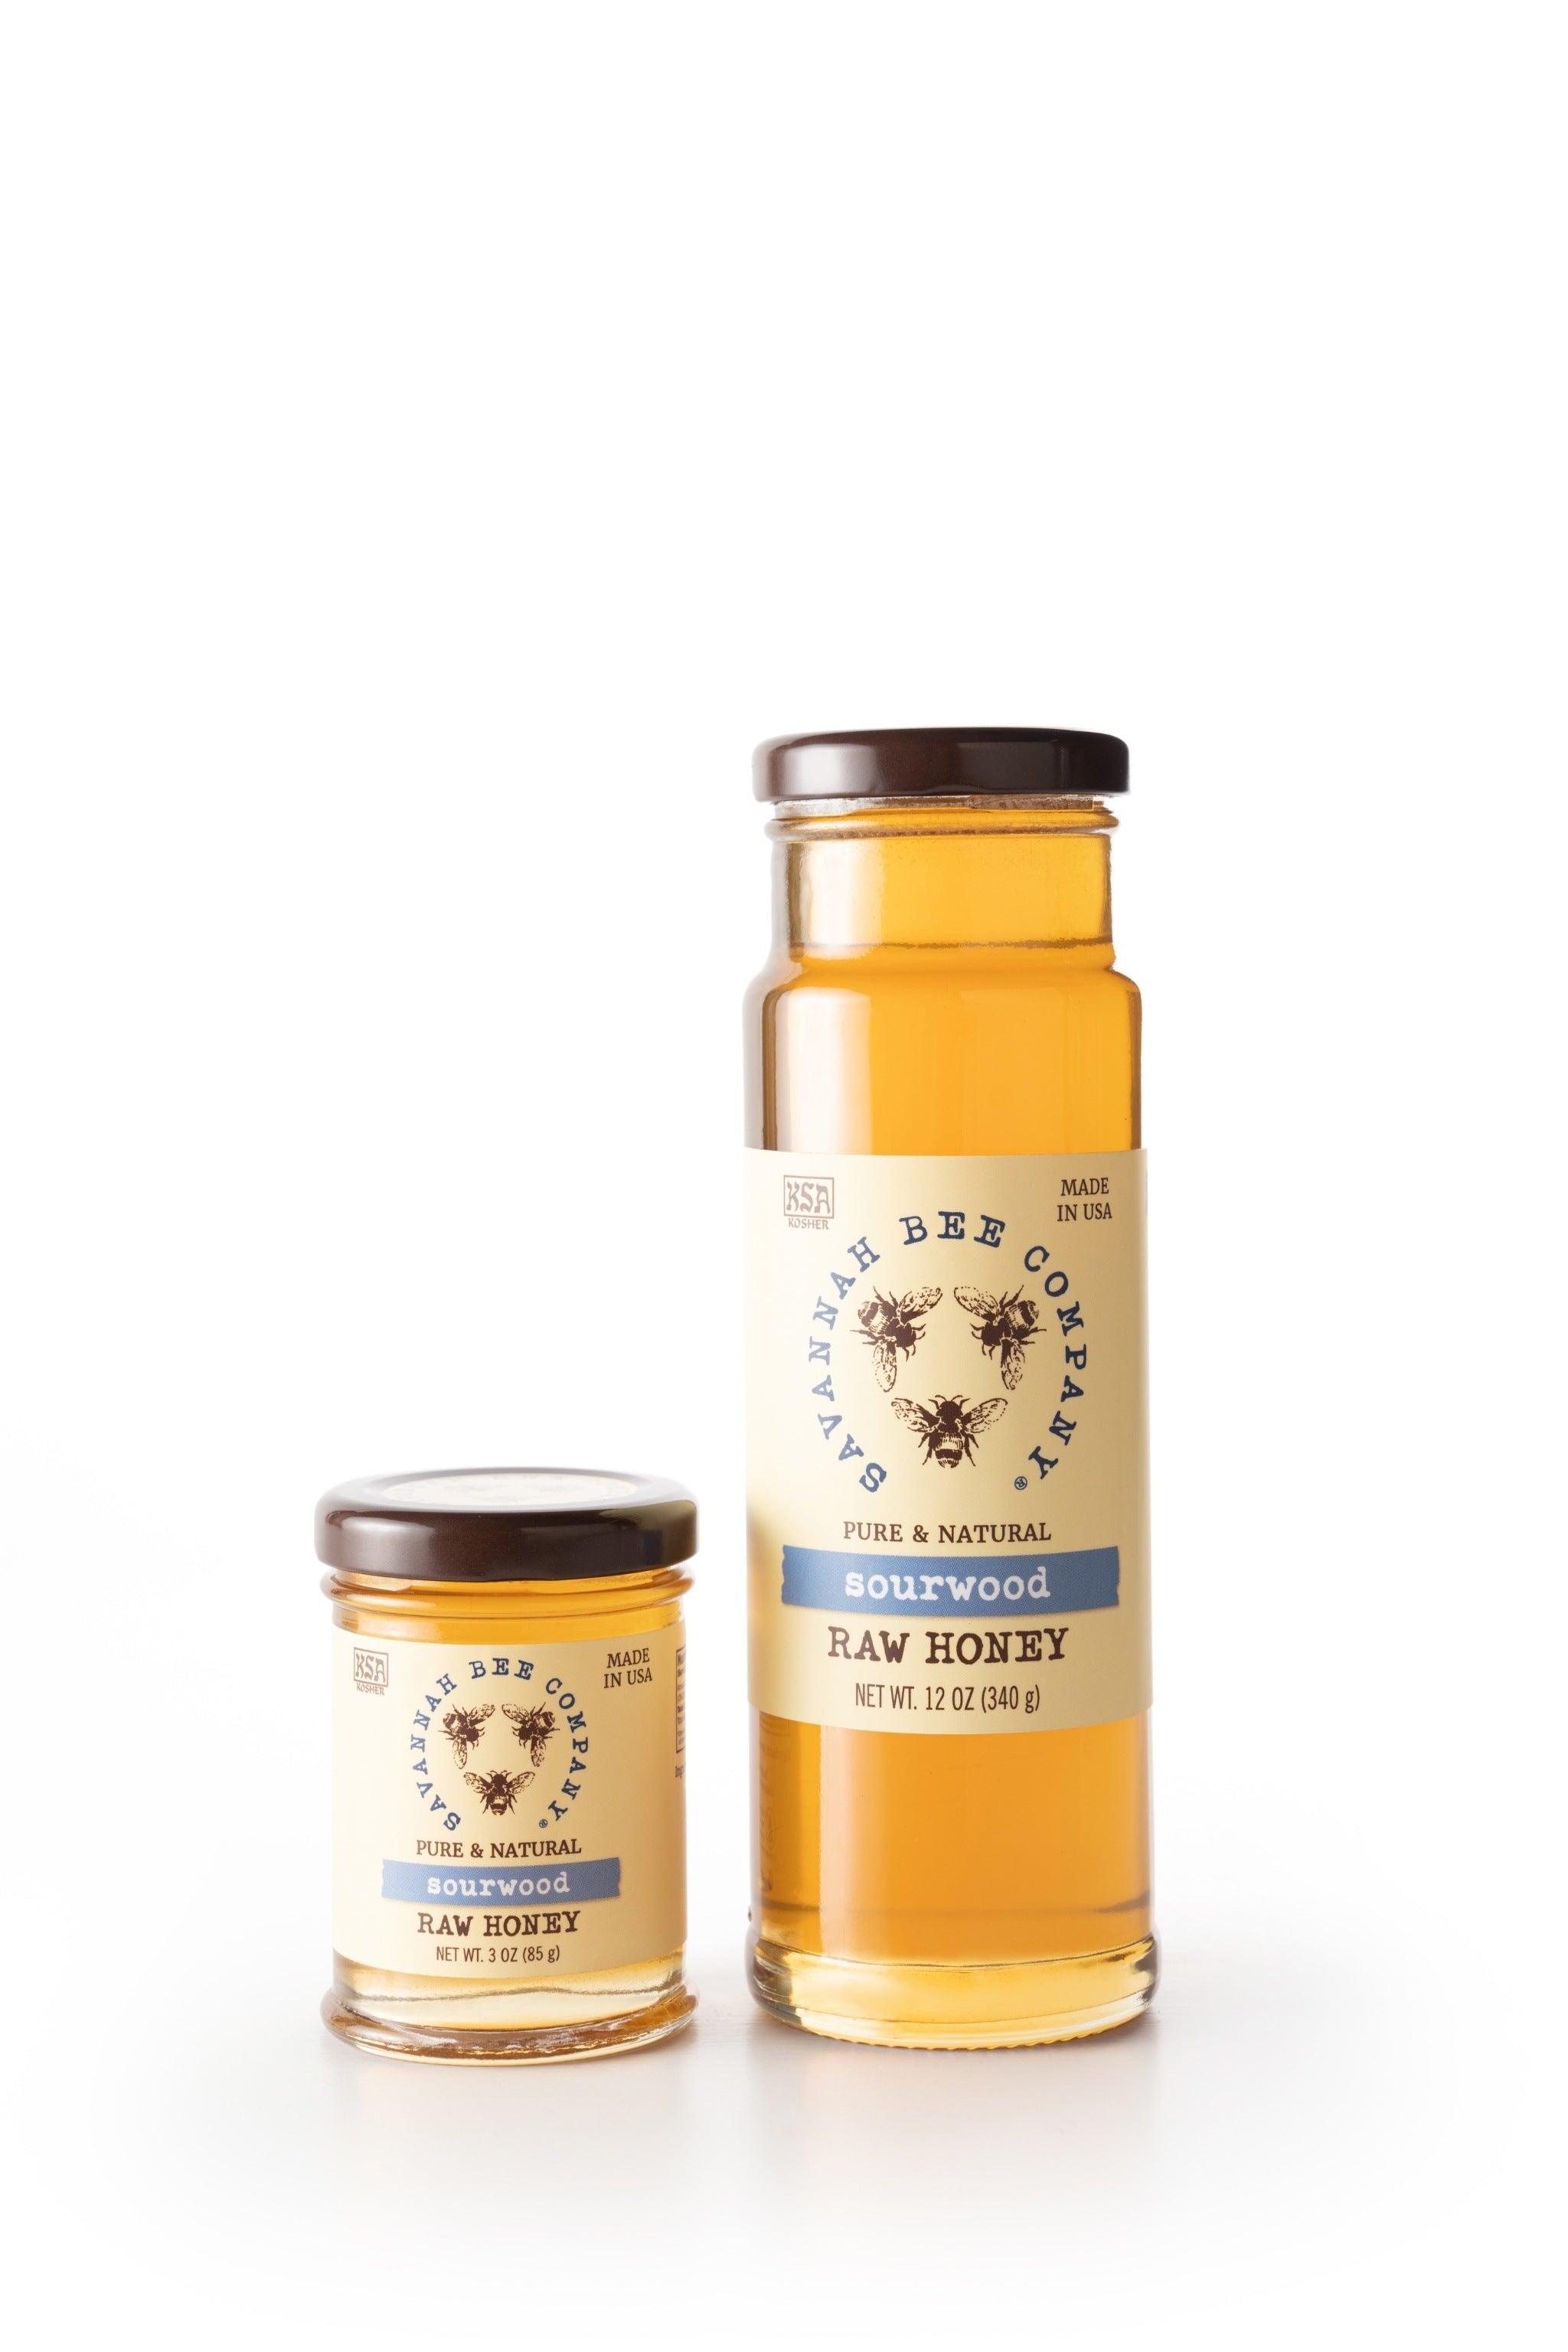 Sourwood Honey – Savannah Bee Company